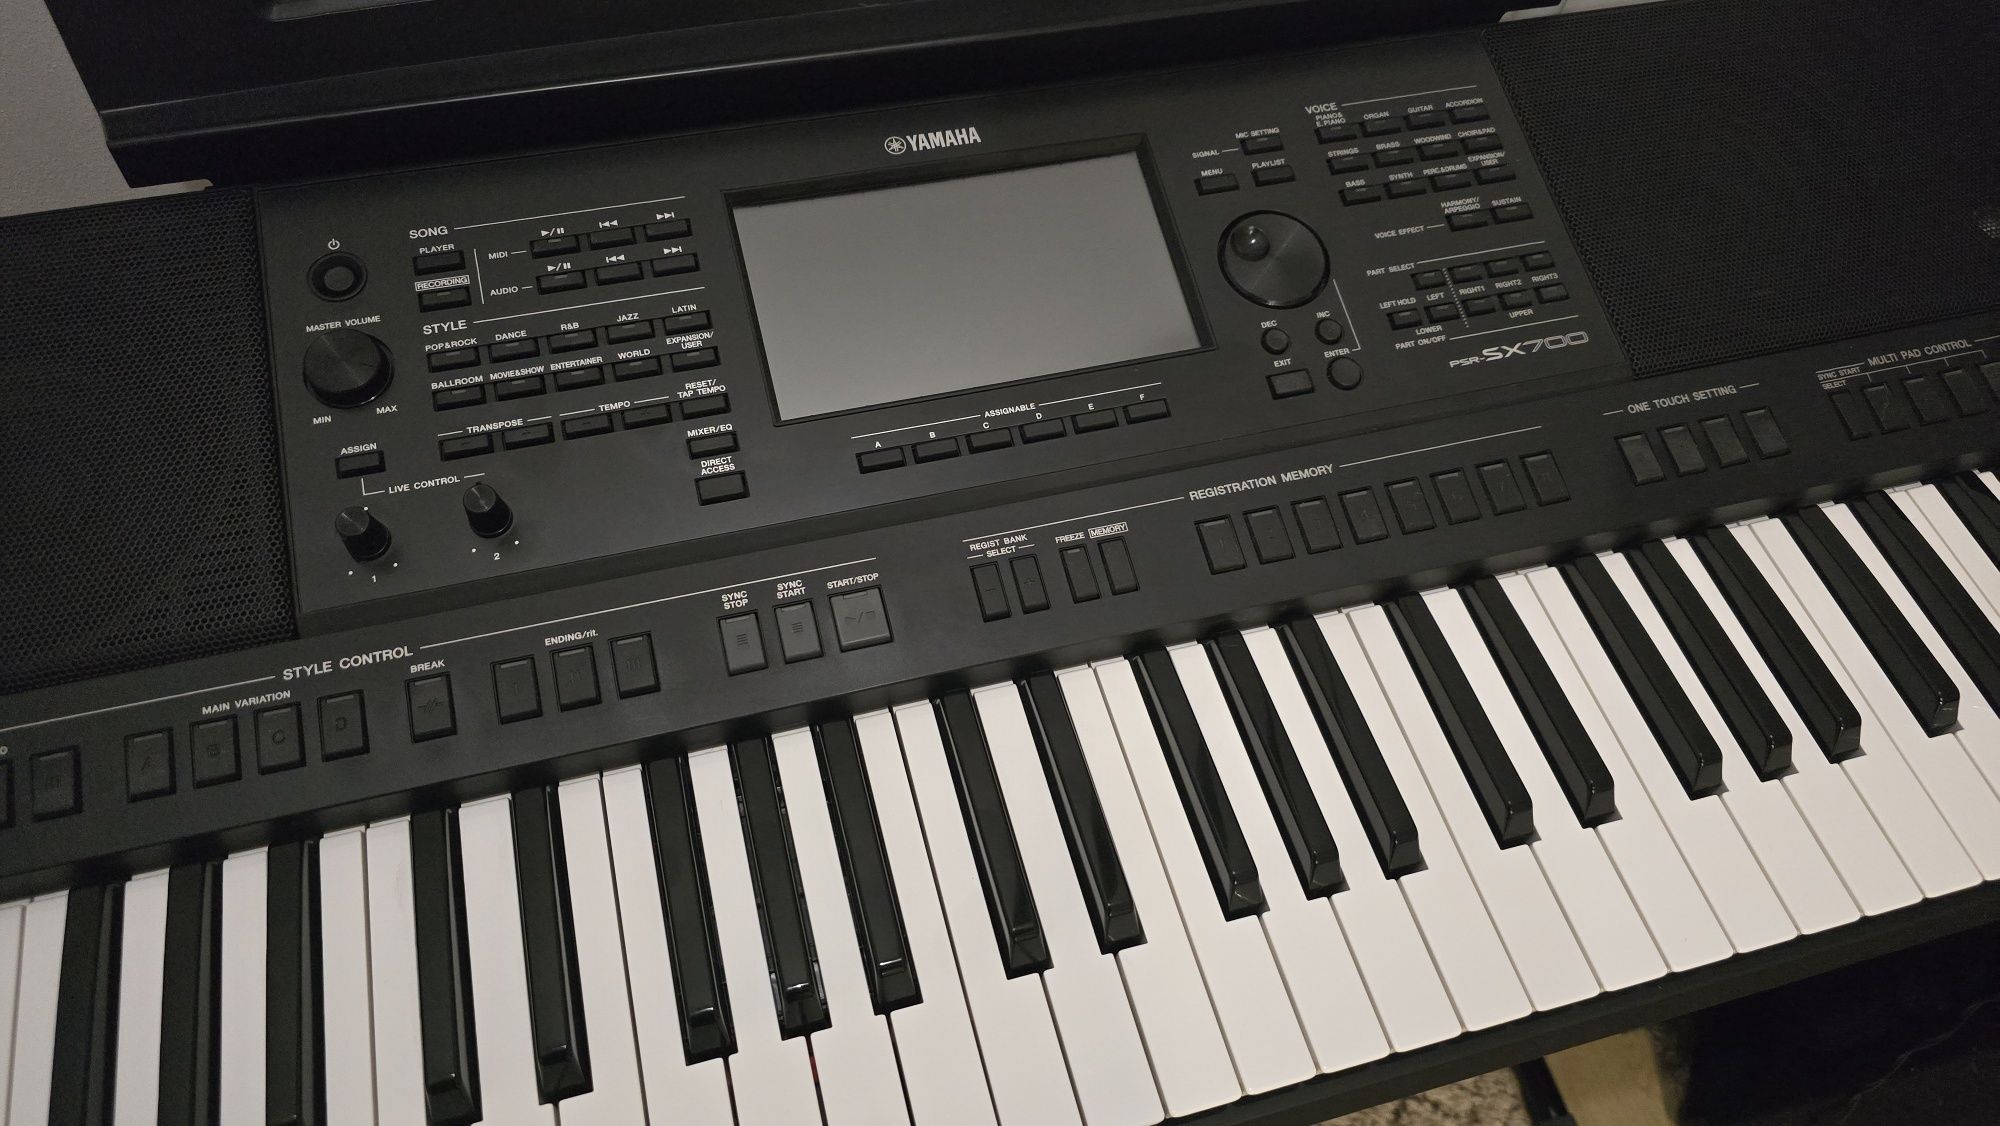 Yamaha SX700 keyboard klawisz organy